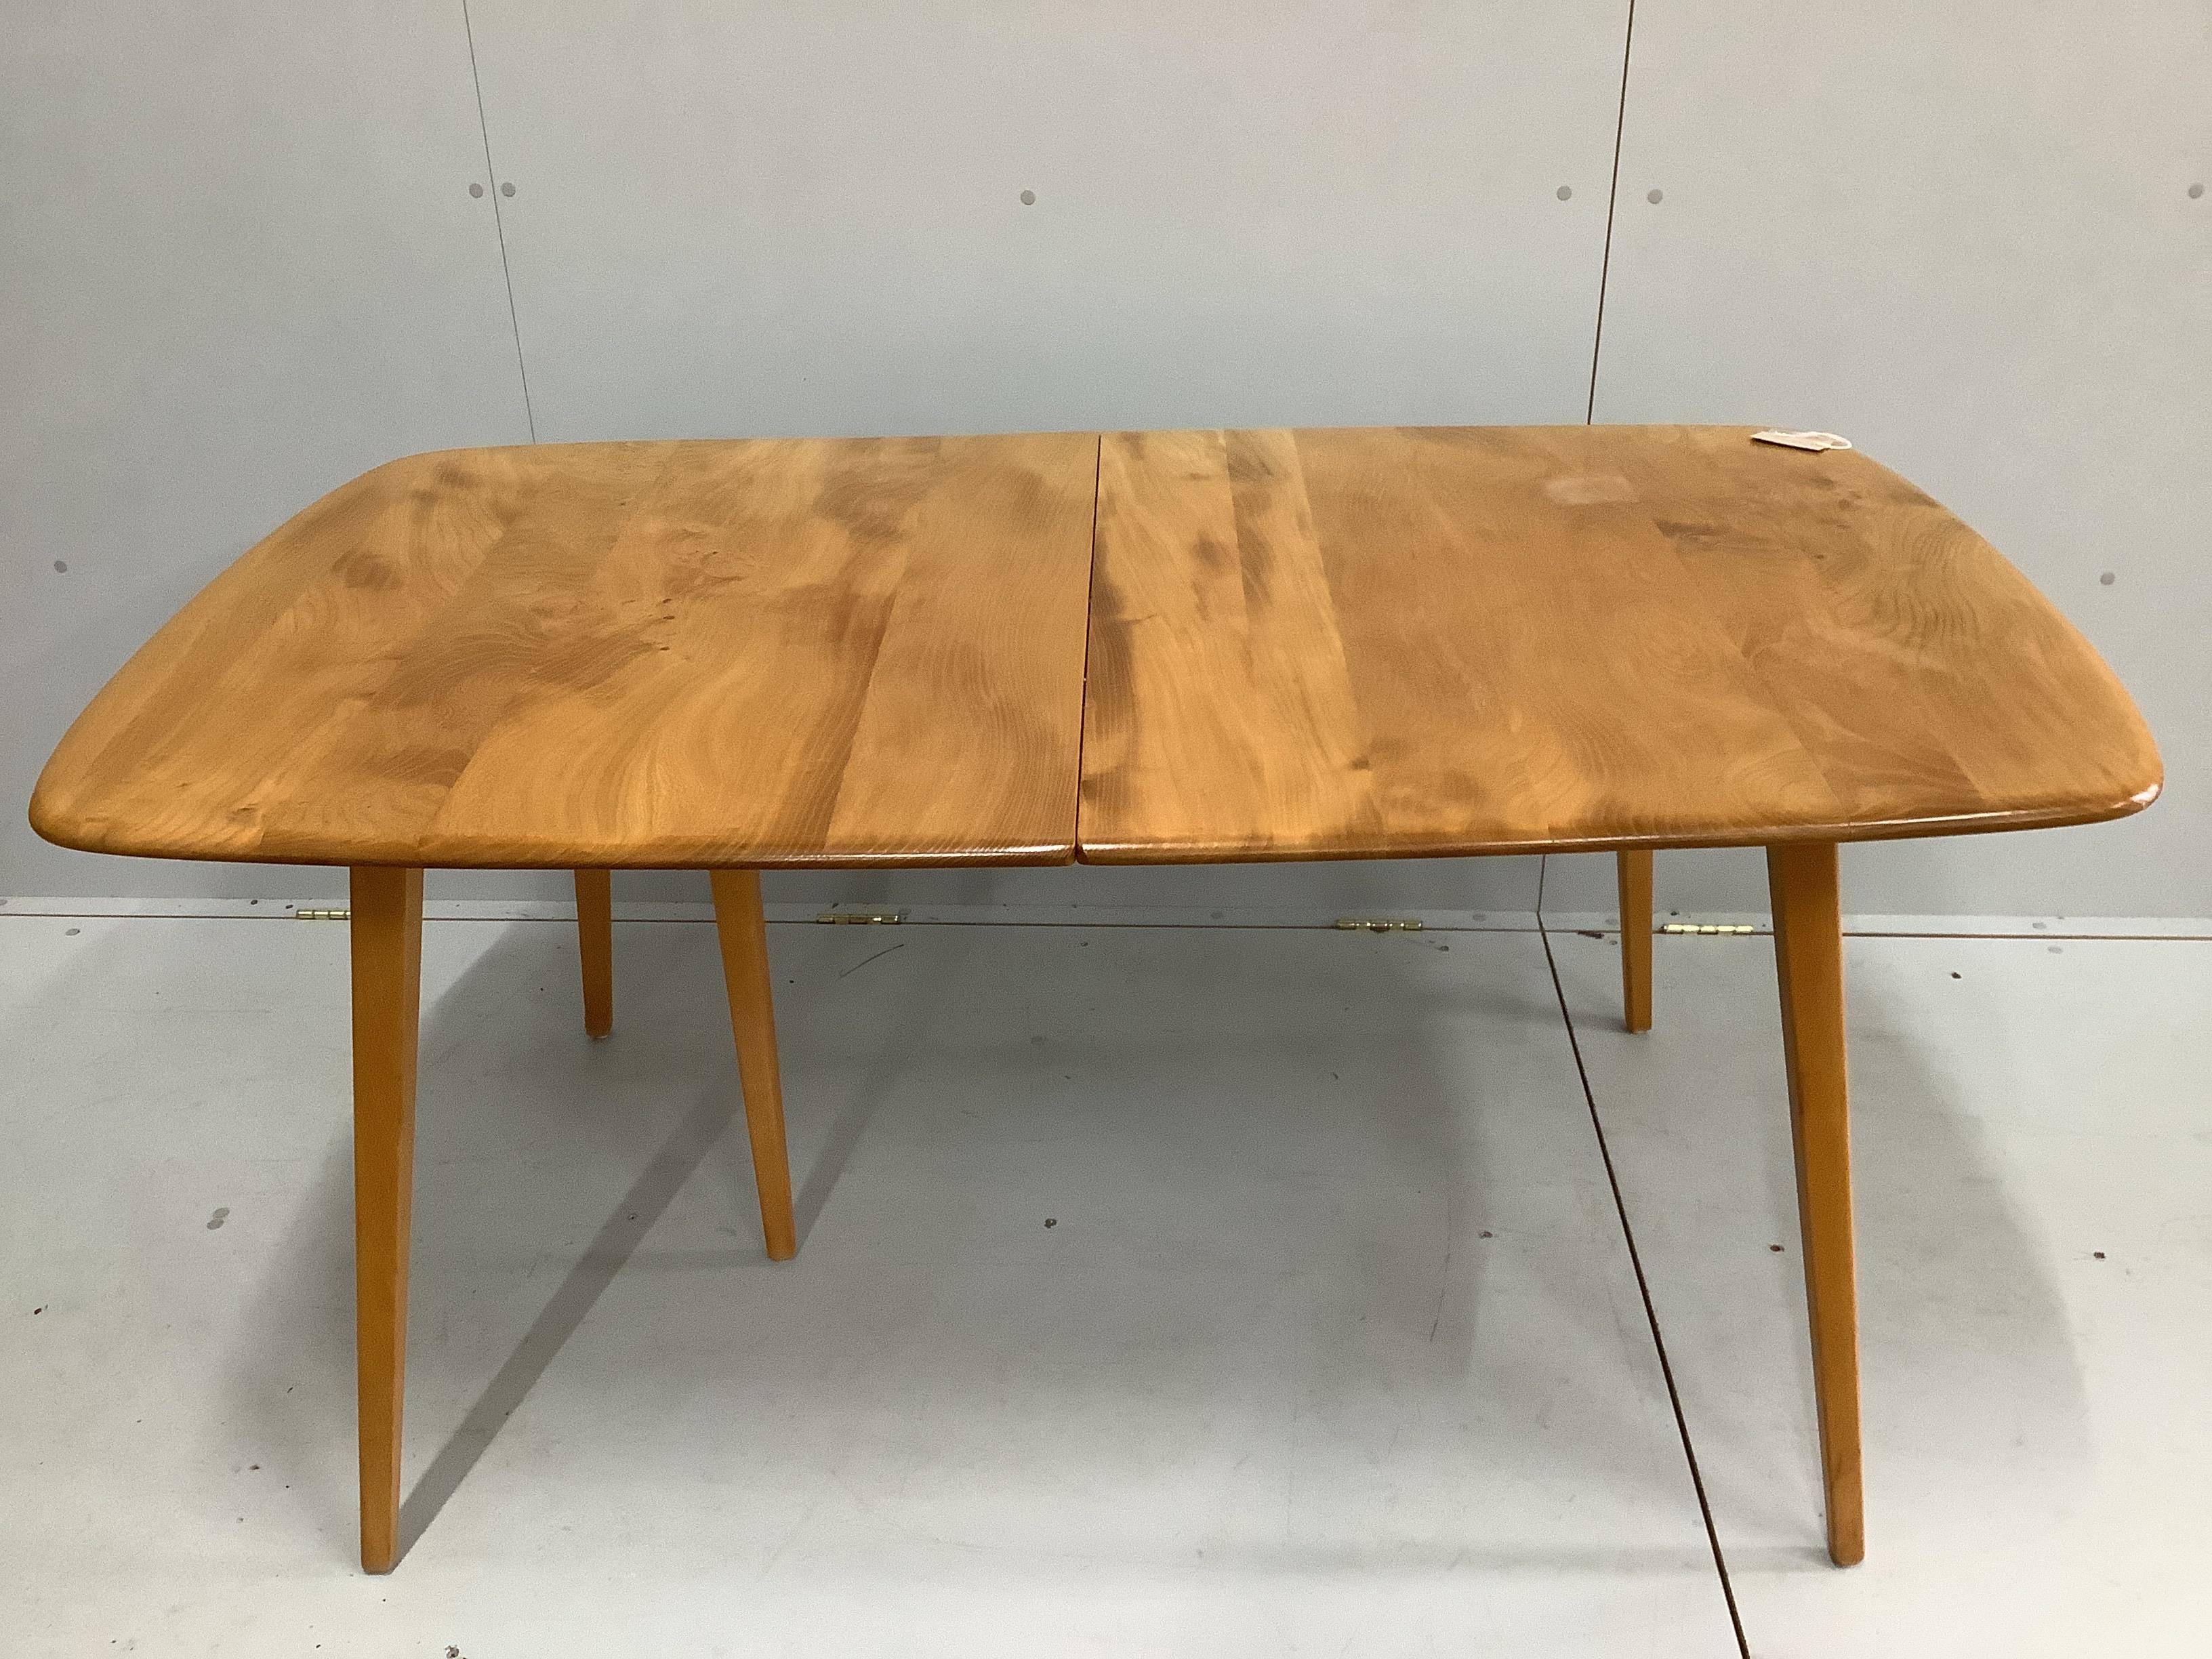 An Ercol elm and beech rectangular extending dining table, 224cm extended, width 88cm, height 71cm together with four Ercol elm and beech comb back dining chairs